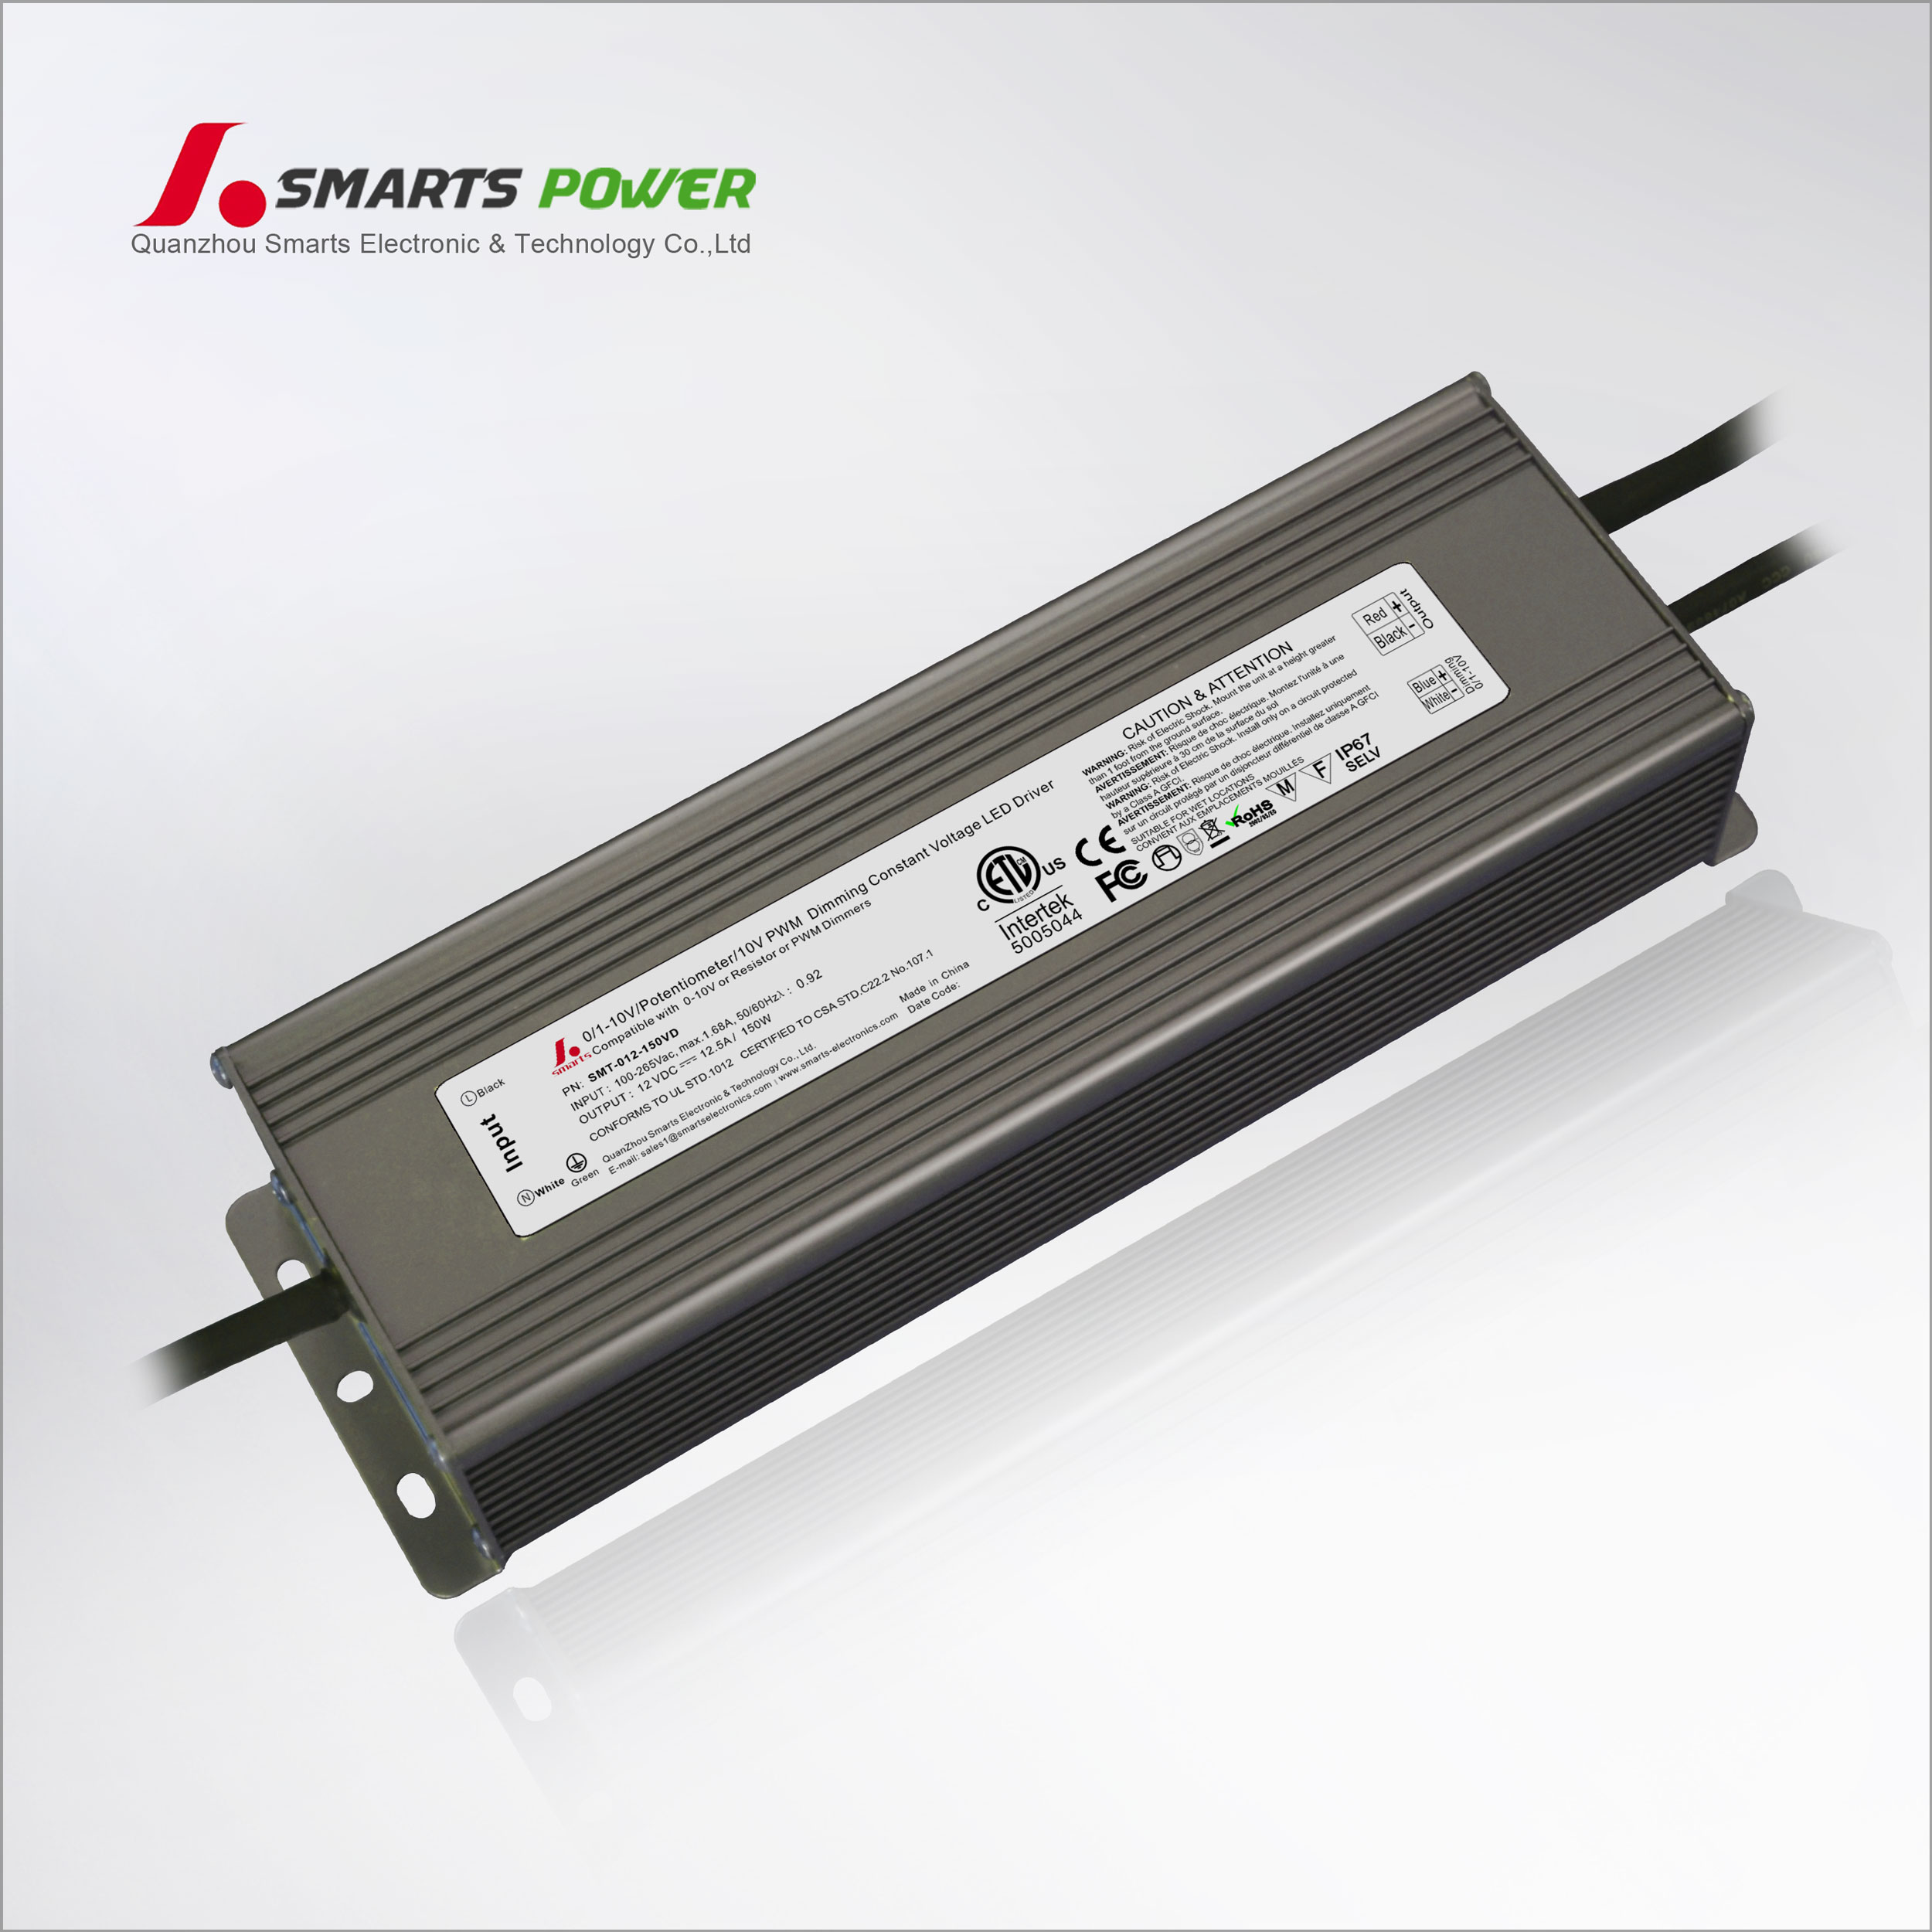 constant voltage & current LED drivers